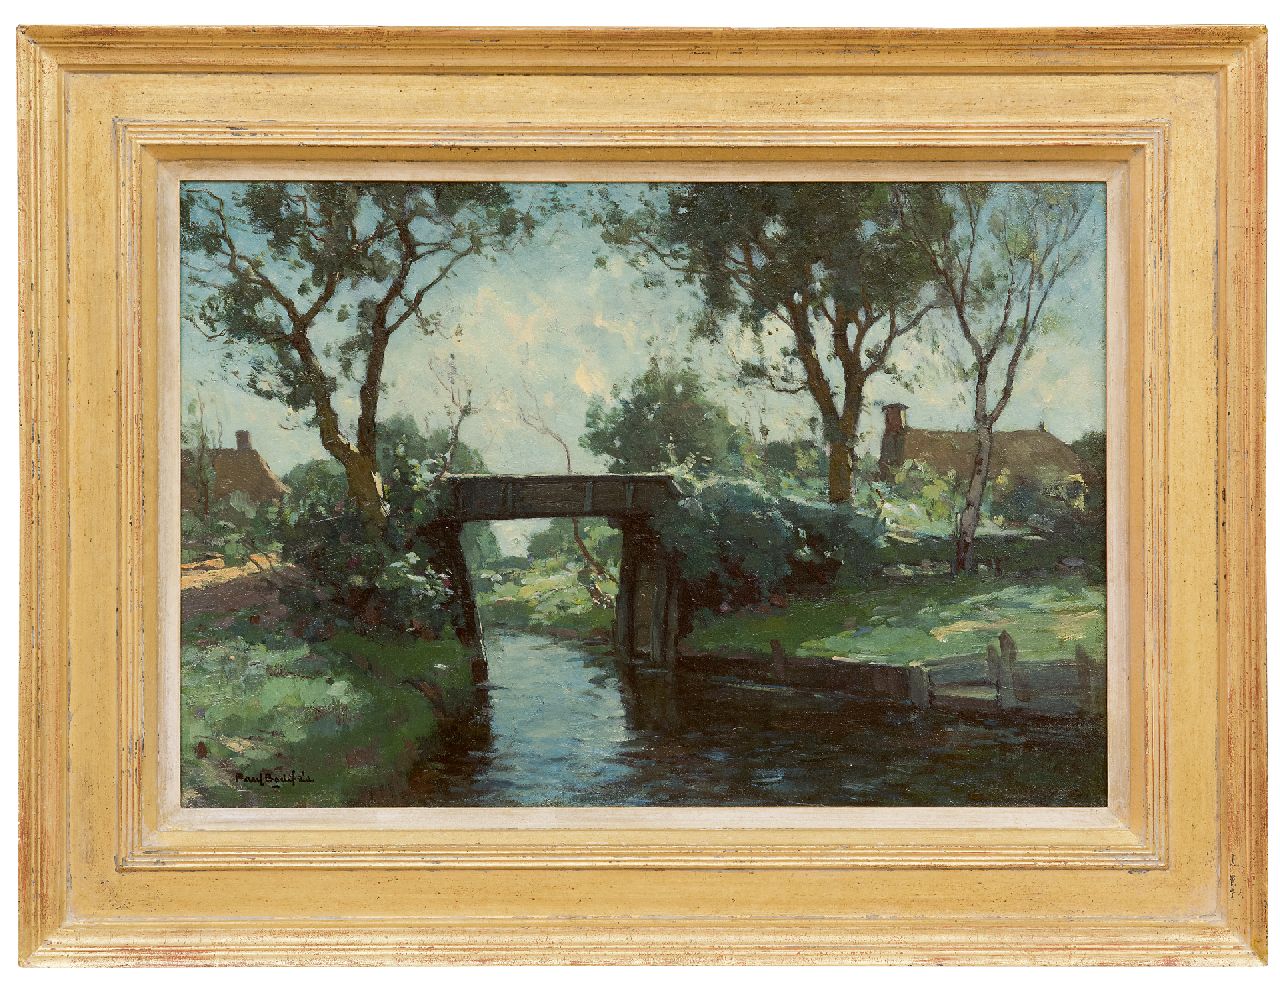 Bodifée J.P.P.  | Johannes Petrus Paulus 'Paul' Bodifée | Paintings offered for sale | Ditch with a bridge, Giethoorn, oil on canvas laid down on board 29.4 x 43.3 cm, signed l.l.